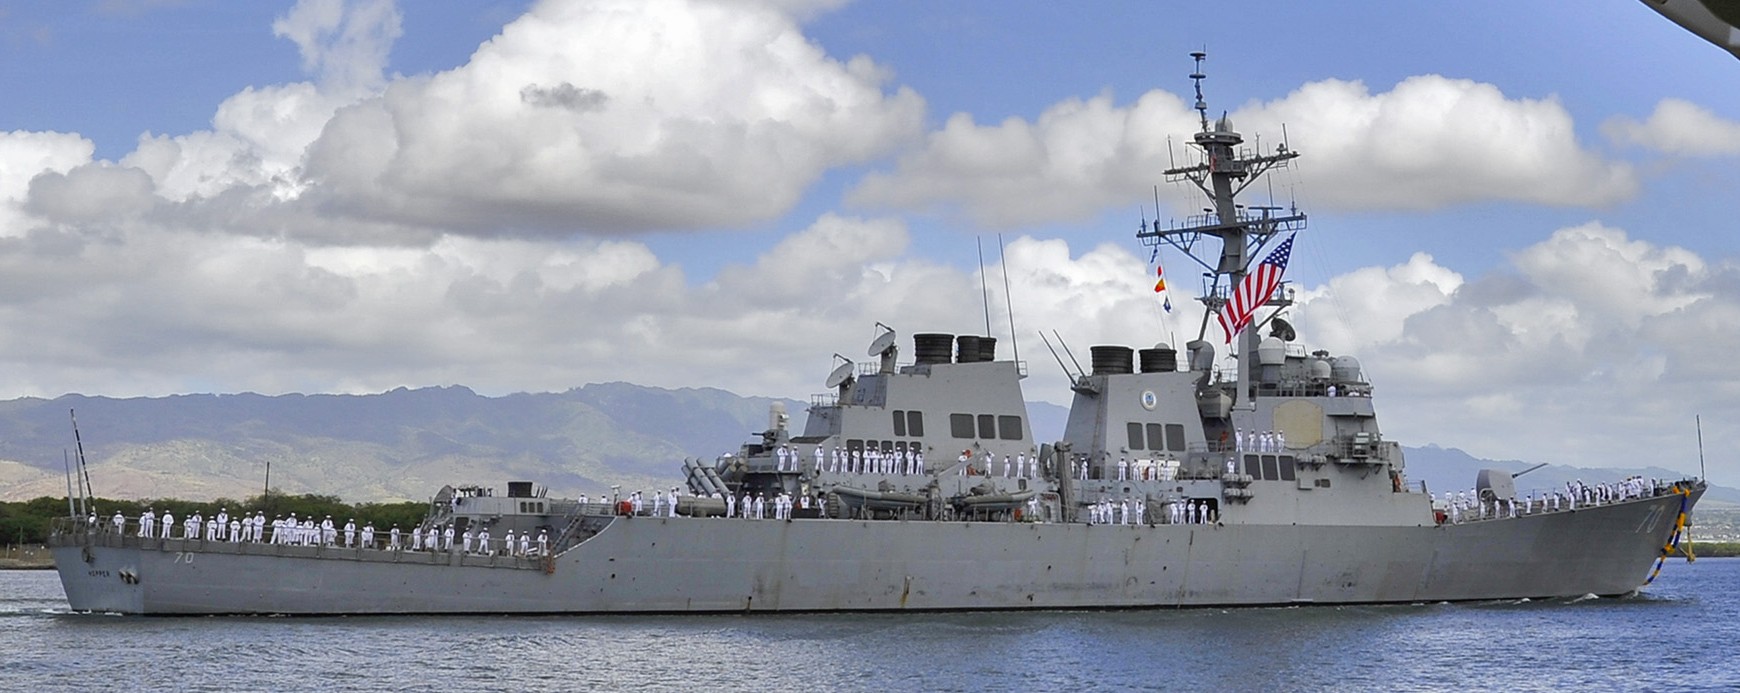 ddg-70 uss hopper guided missile destroyer arleigh burke class aegis bmd 17 pearl harbor hickam hawaii jbphh